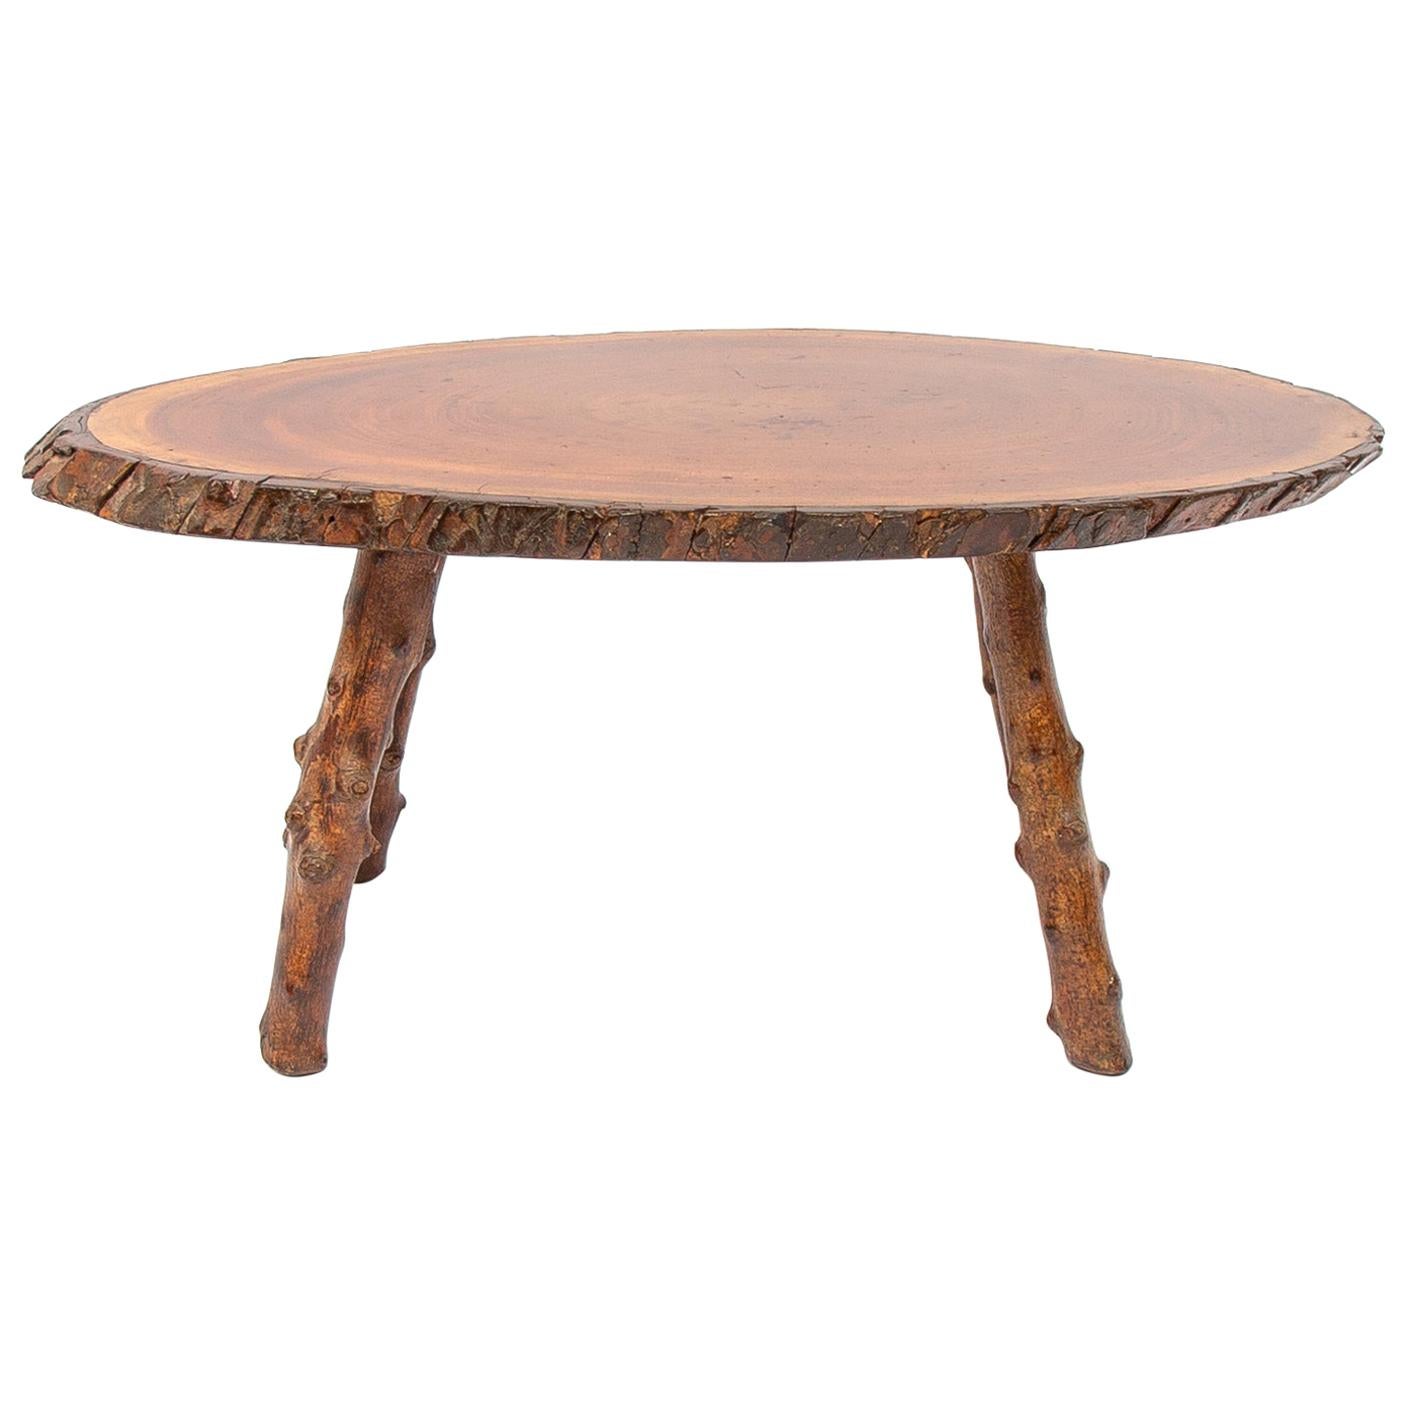 Vintage Rustic Walnut Wood Side or Coffee Table